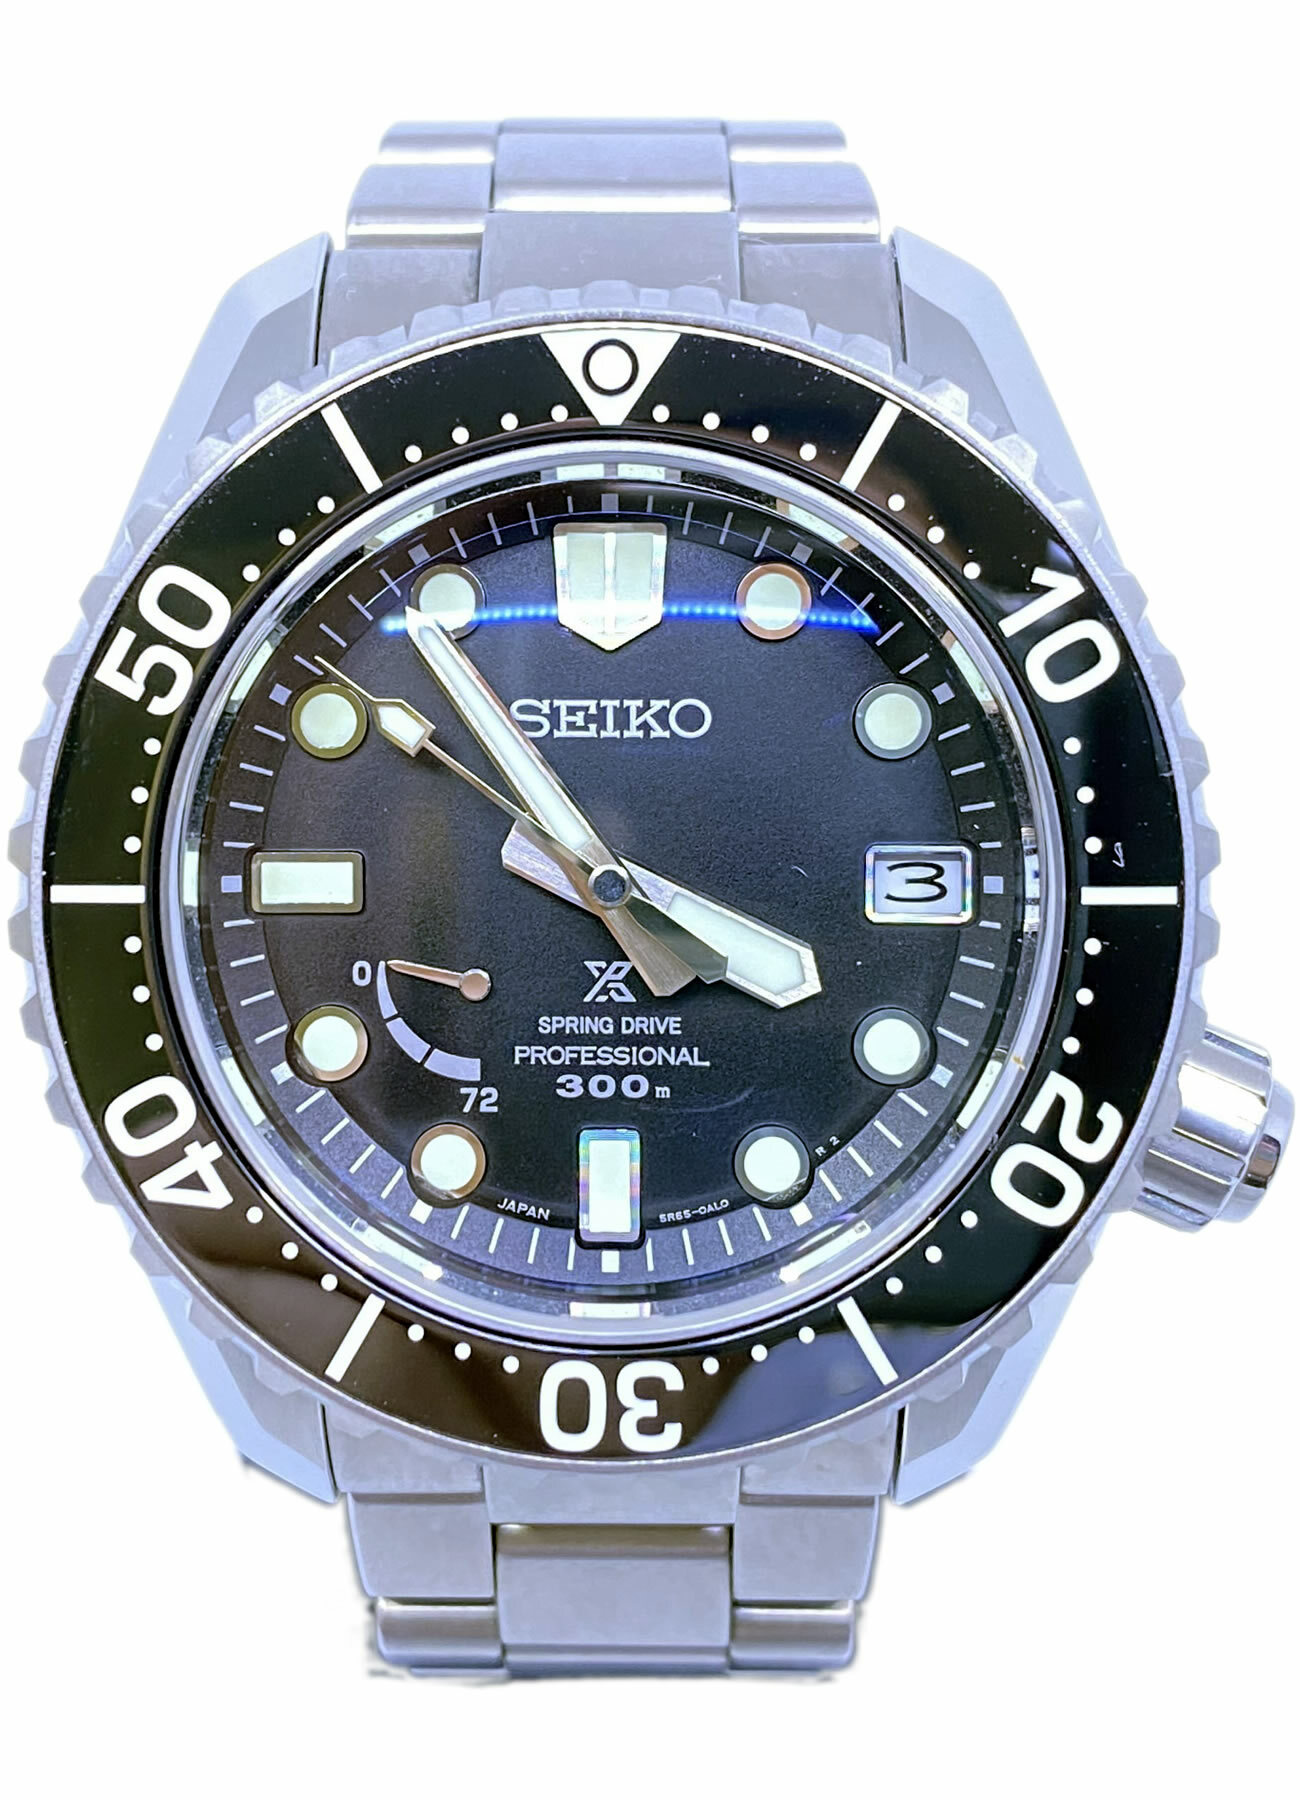 Seiko Prospex LX SNR029 Spring Drive GMT Titanium - Exquisite Timepieces:  Checkout